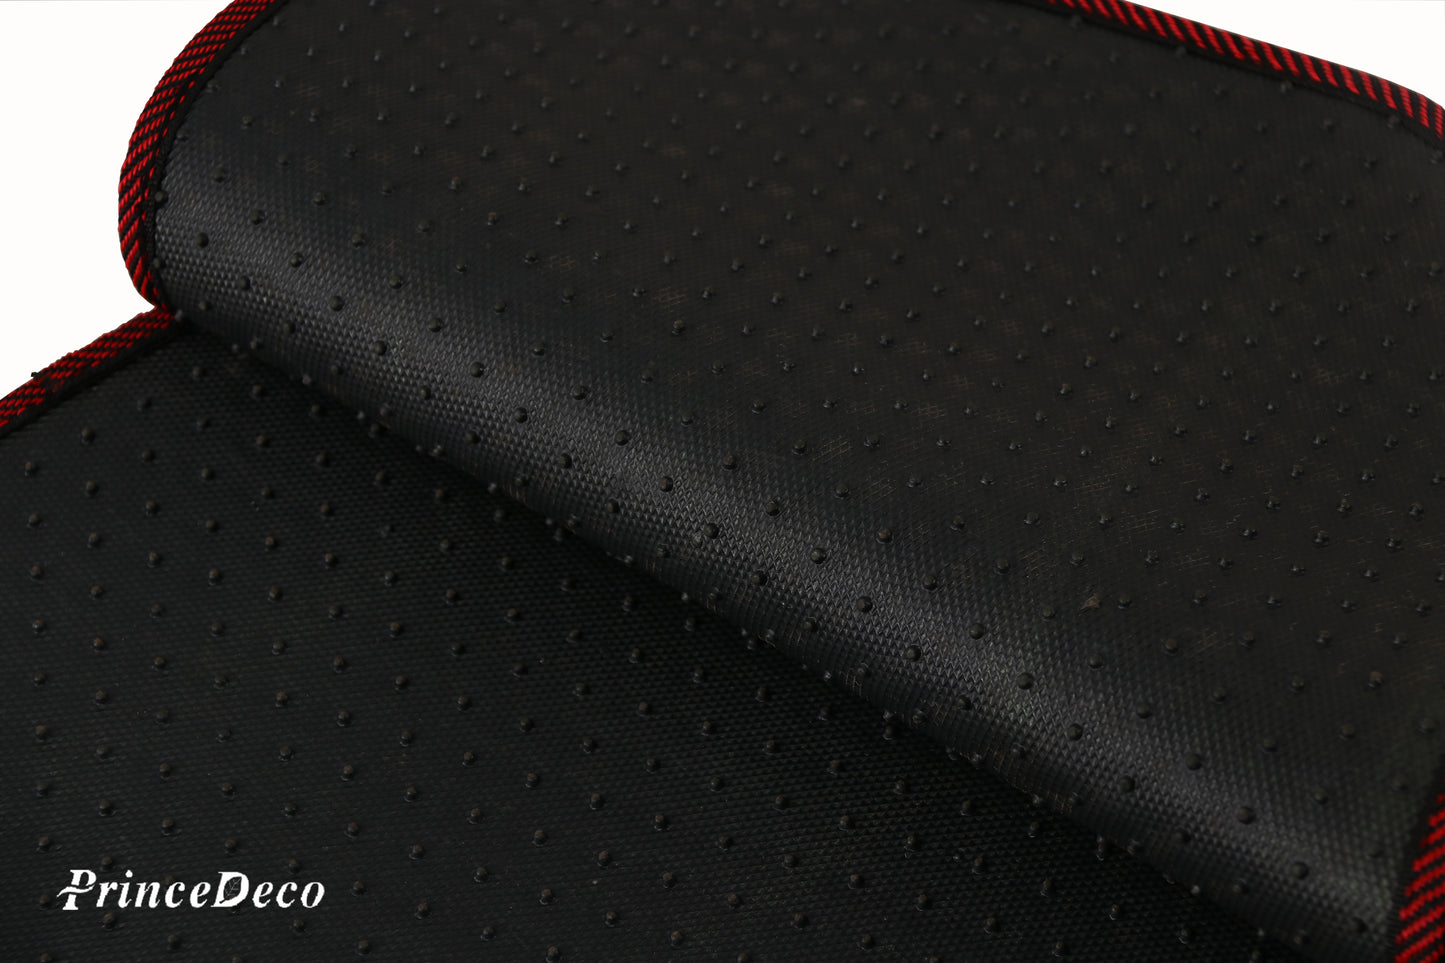 PrinceDeco Classic Carpet Floor Mats for Car & Auto(Black)